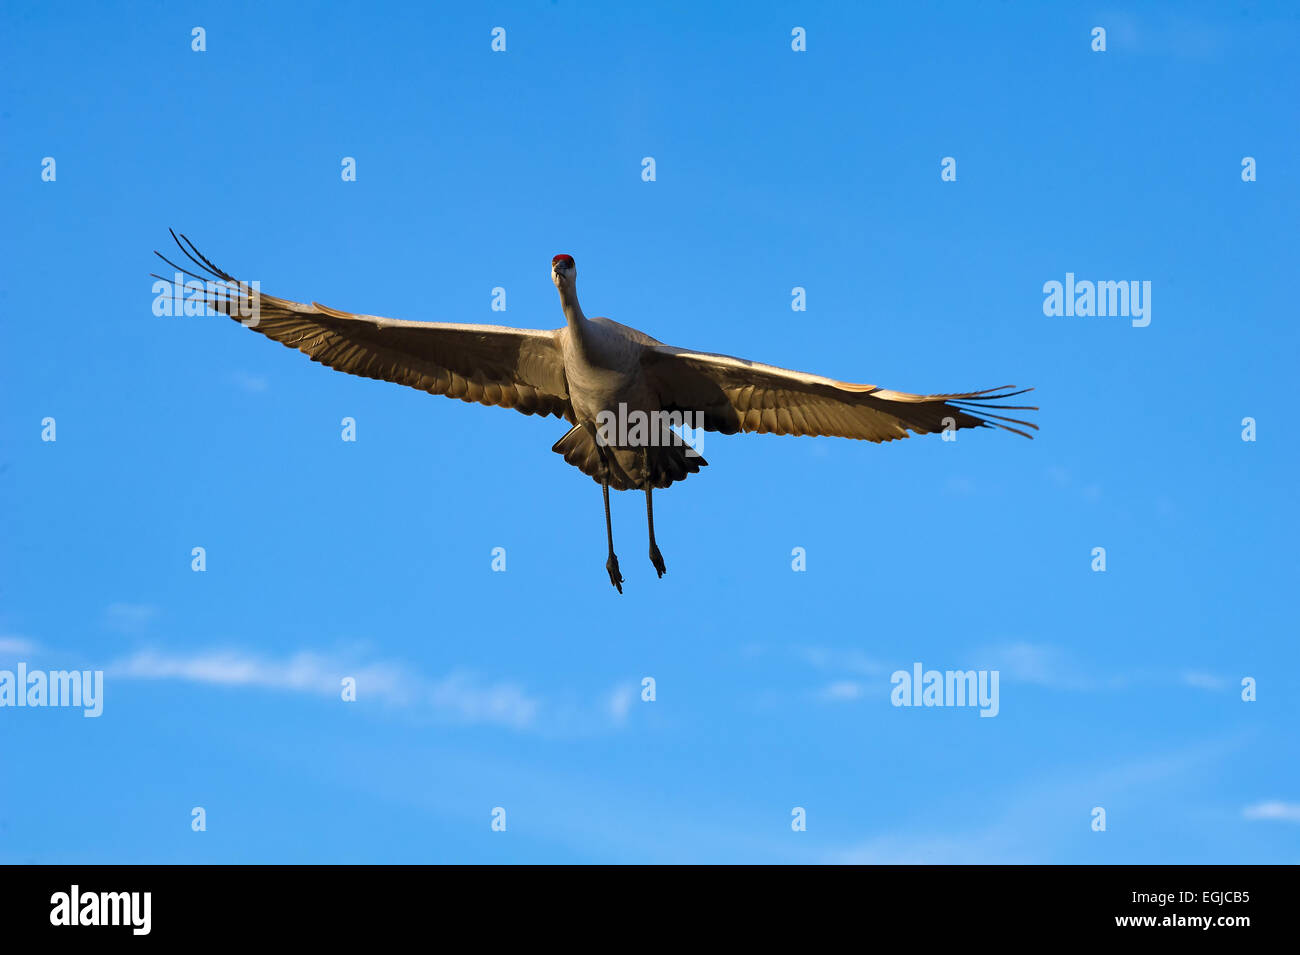 A sandhill crane flying in the sky of Bosque Del Apache in New Mexico, USA Stock Photo